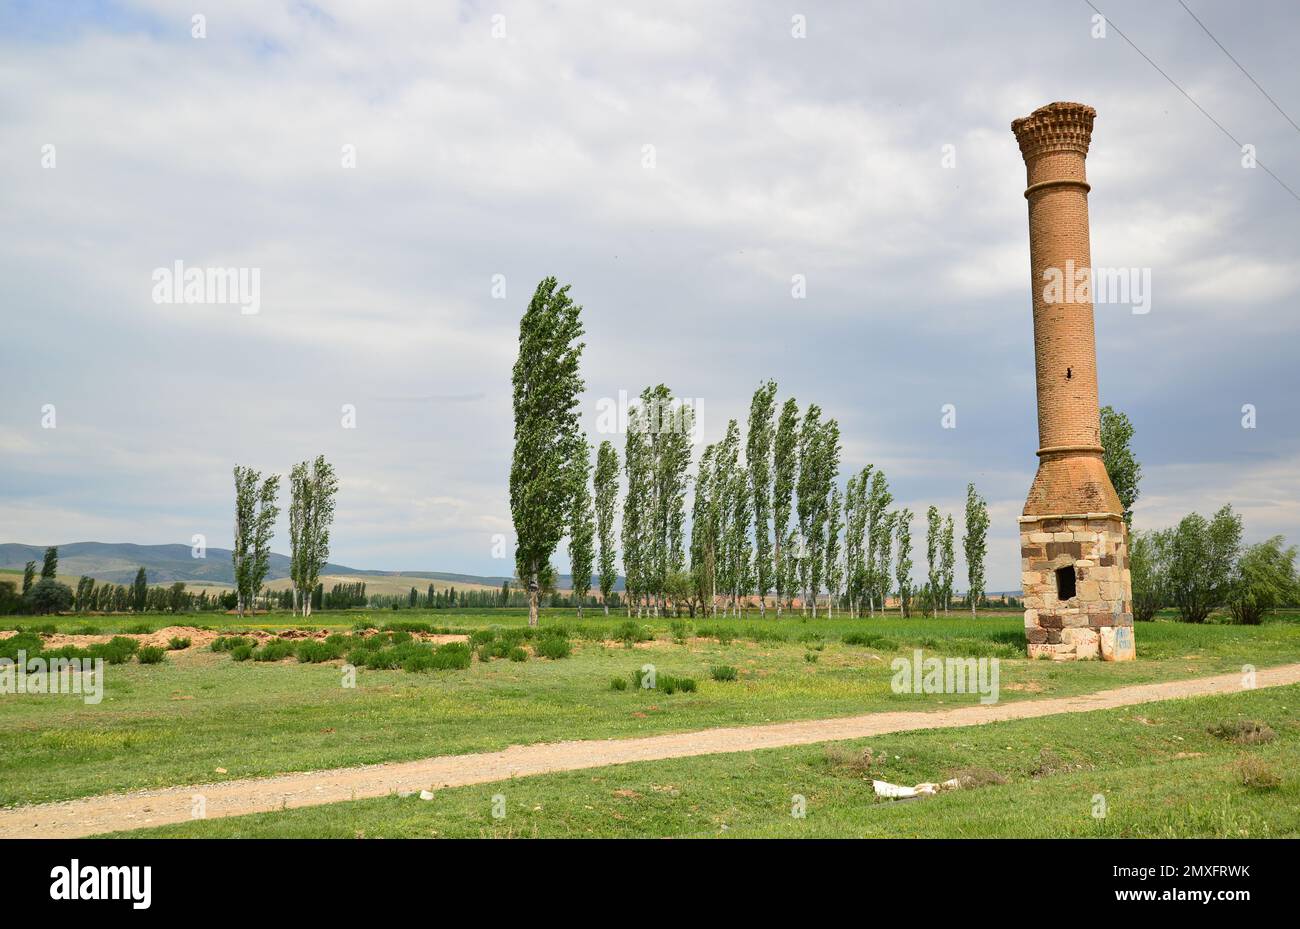 Una bella vista di un'alta torre difensiva in pietra in una zona verde fin dall'antichità Foto Stock